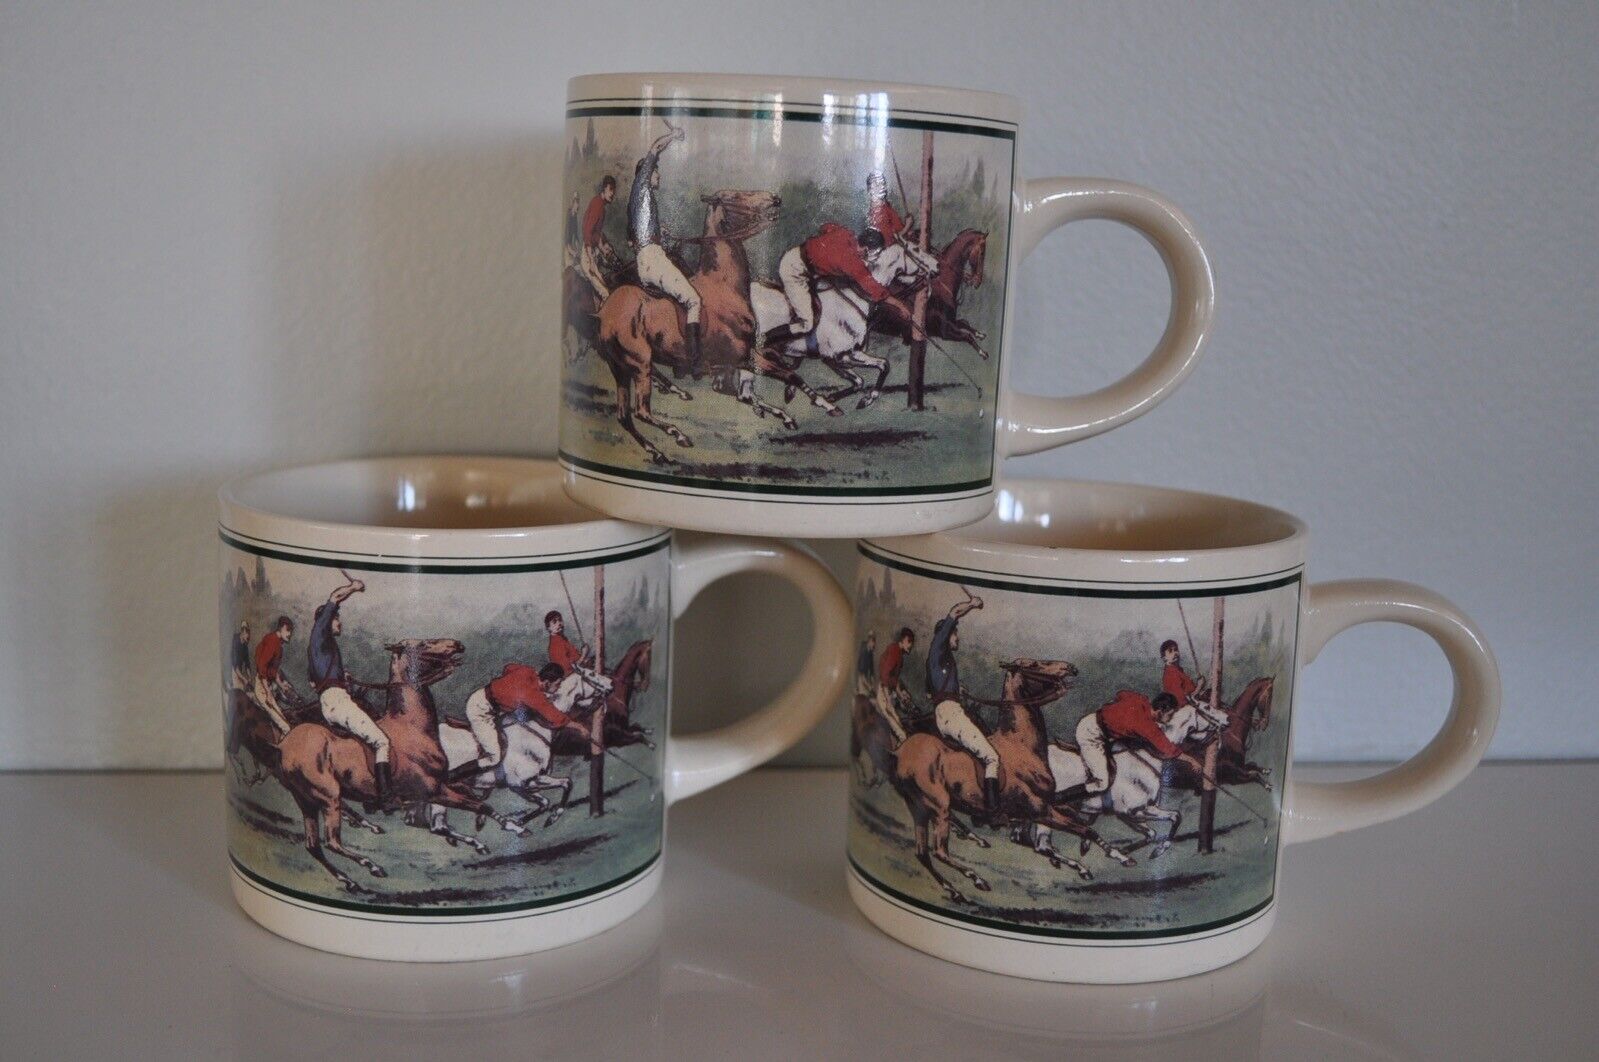 Vintage Polo Mugs Set of 3 Made in Korea Ceramic Mugs - 